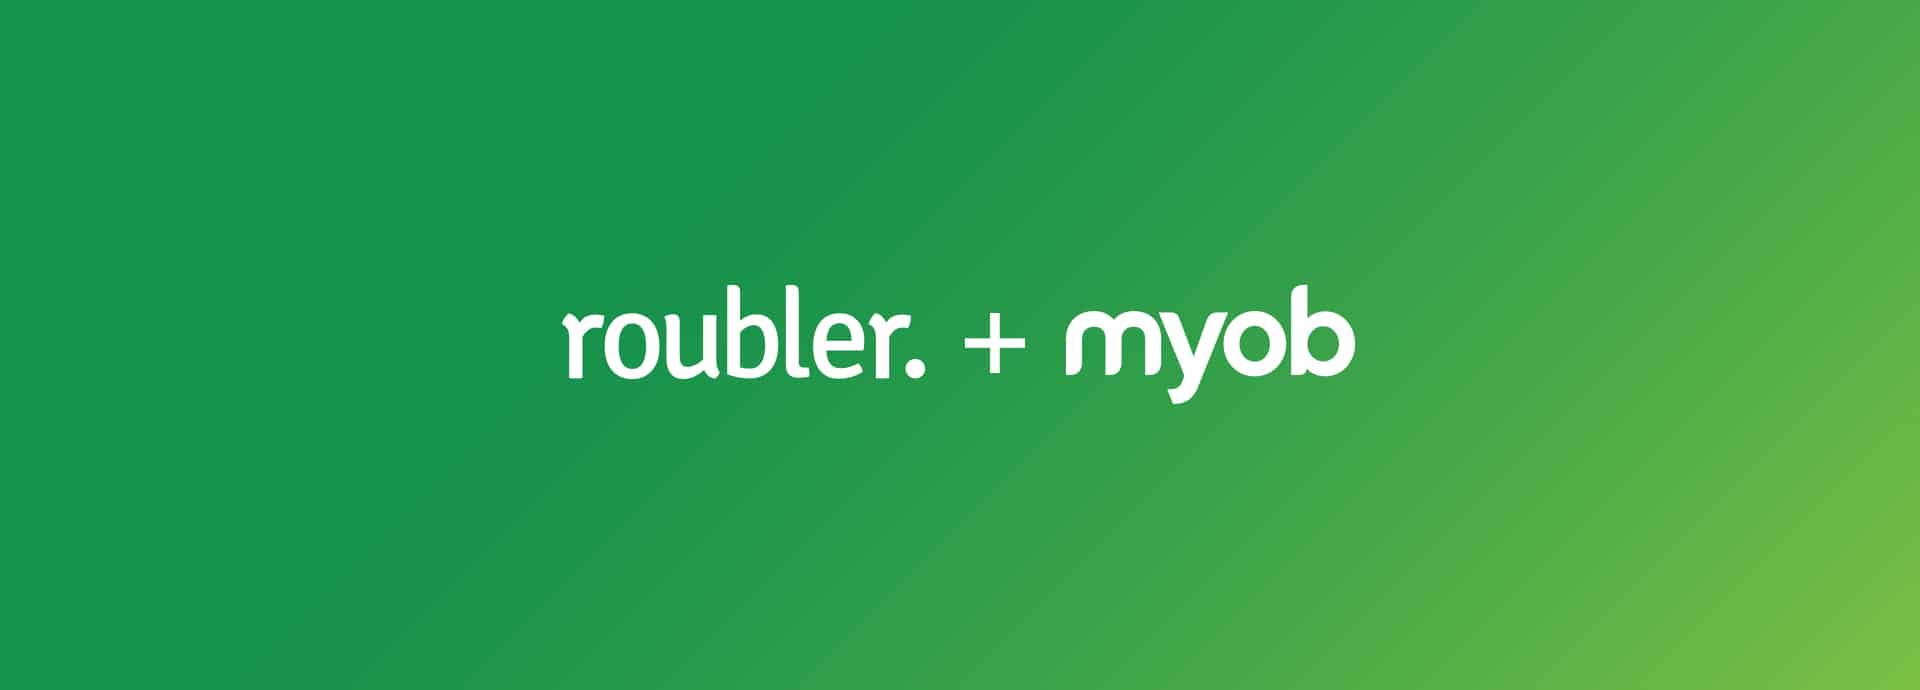 myob partnership announcement